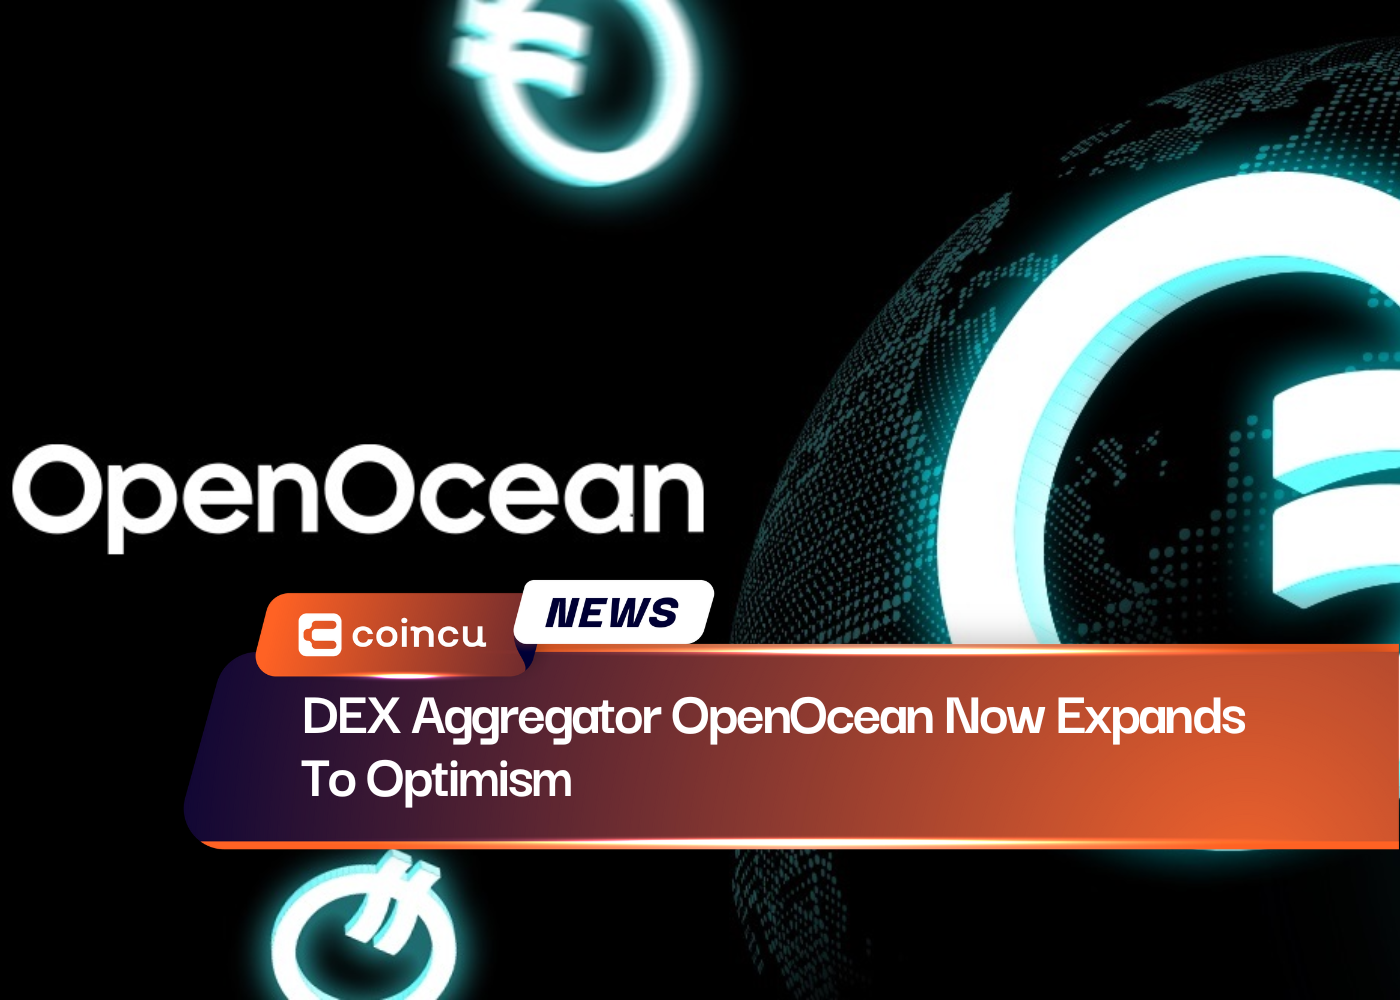 DEX-Aggregator OpenOcean expandiert jetzt zu Optimism